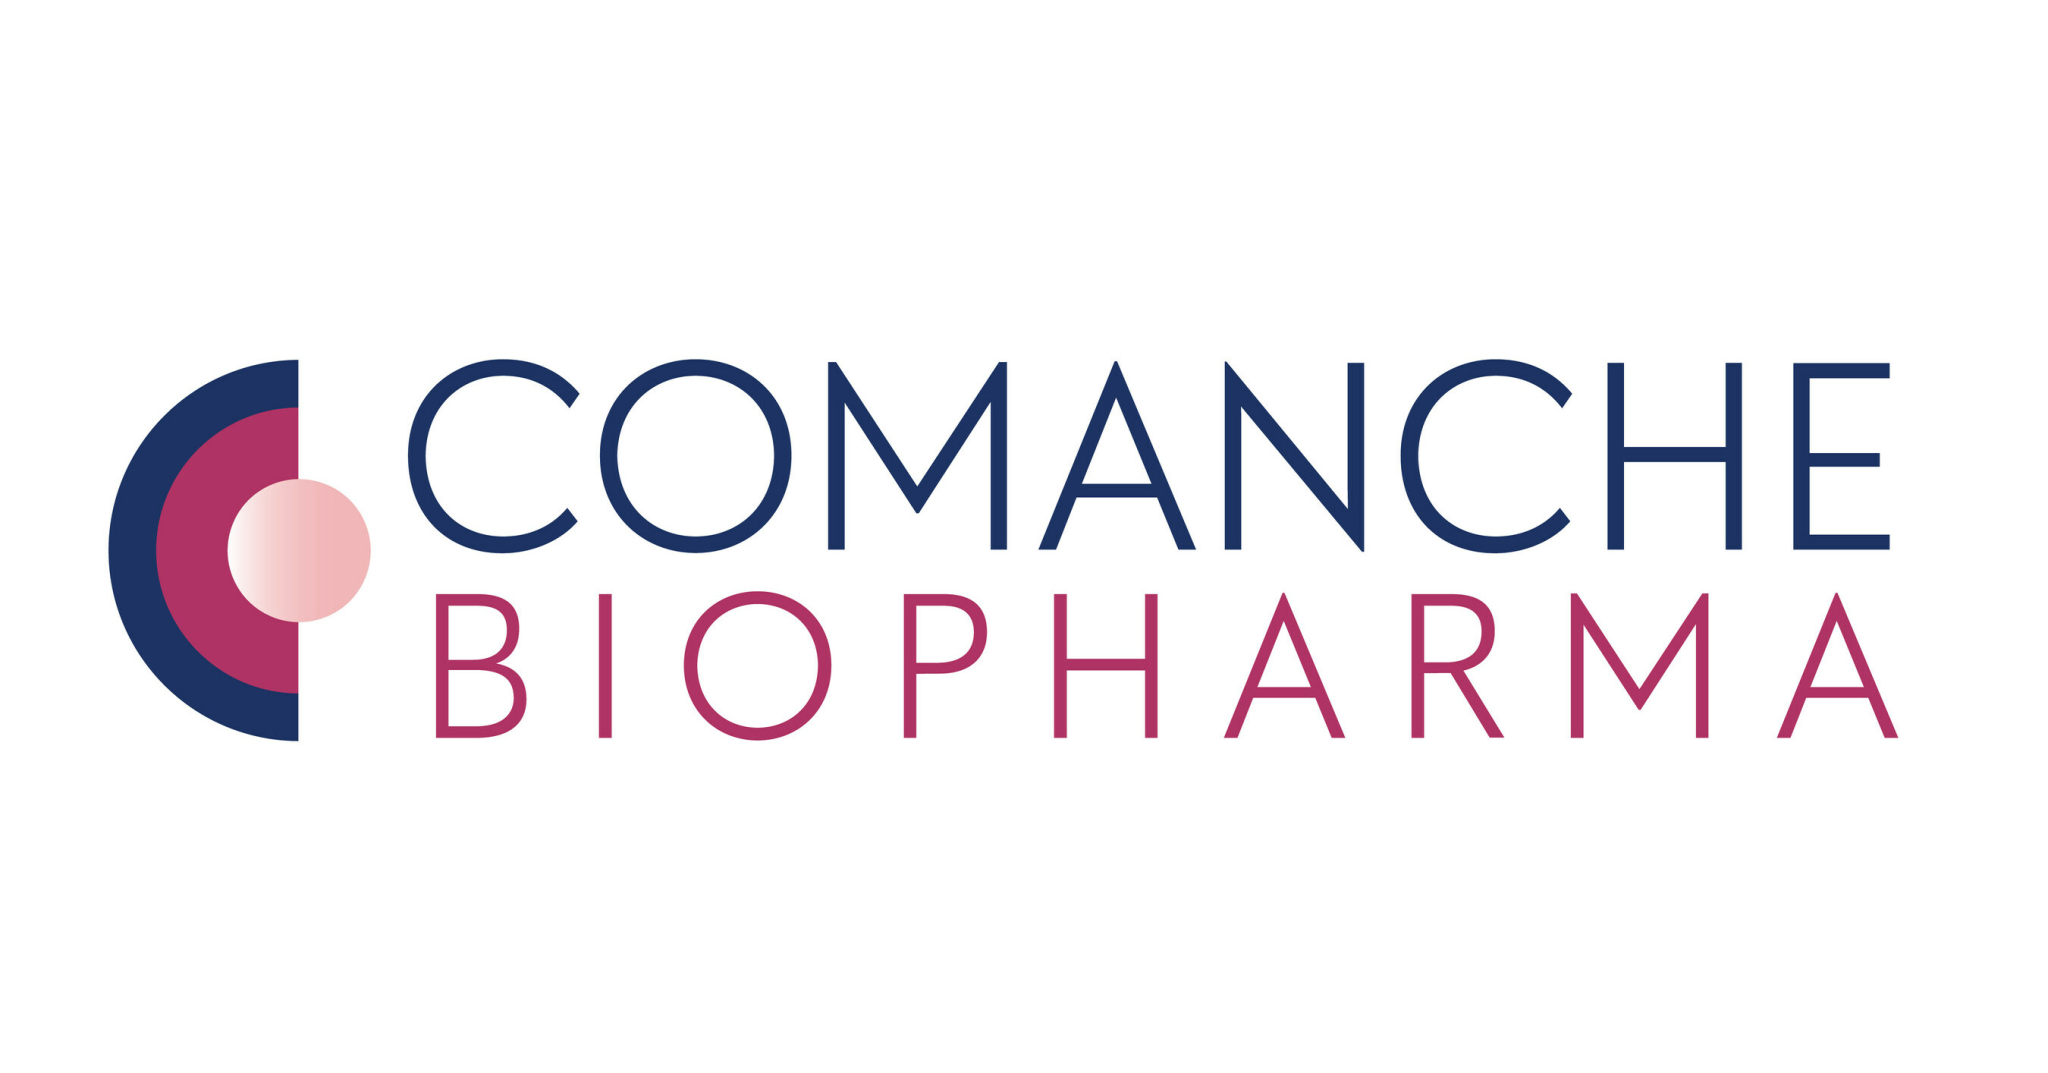 Comanche Biopharma